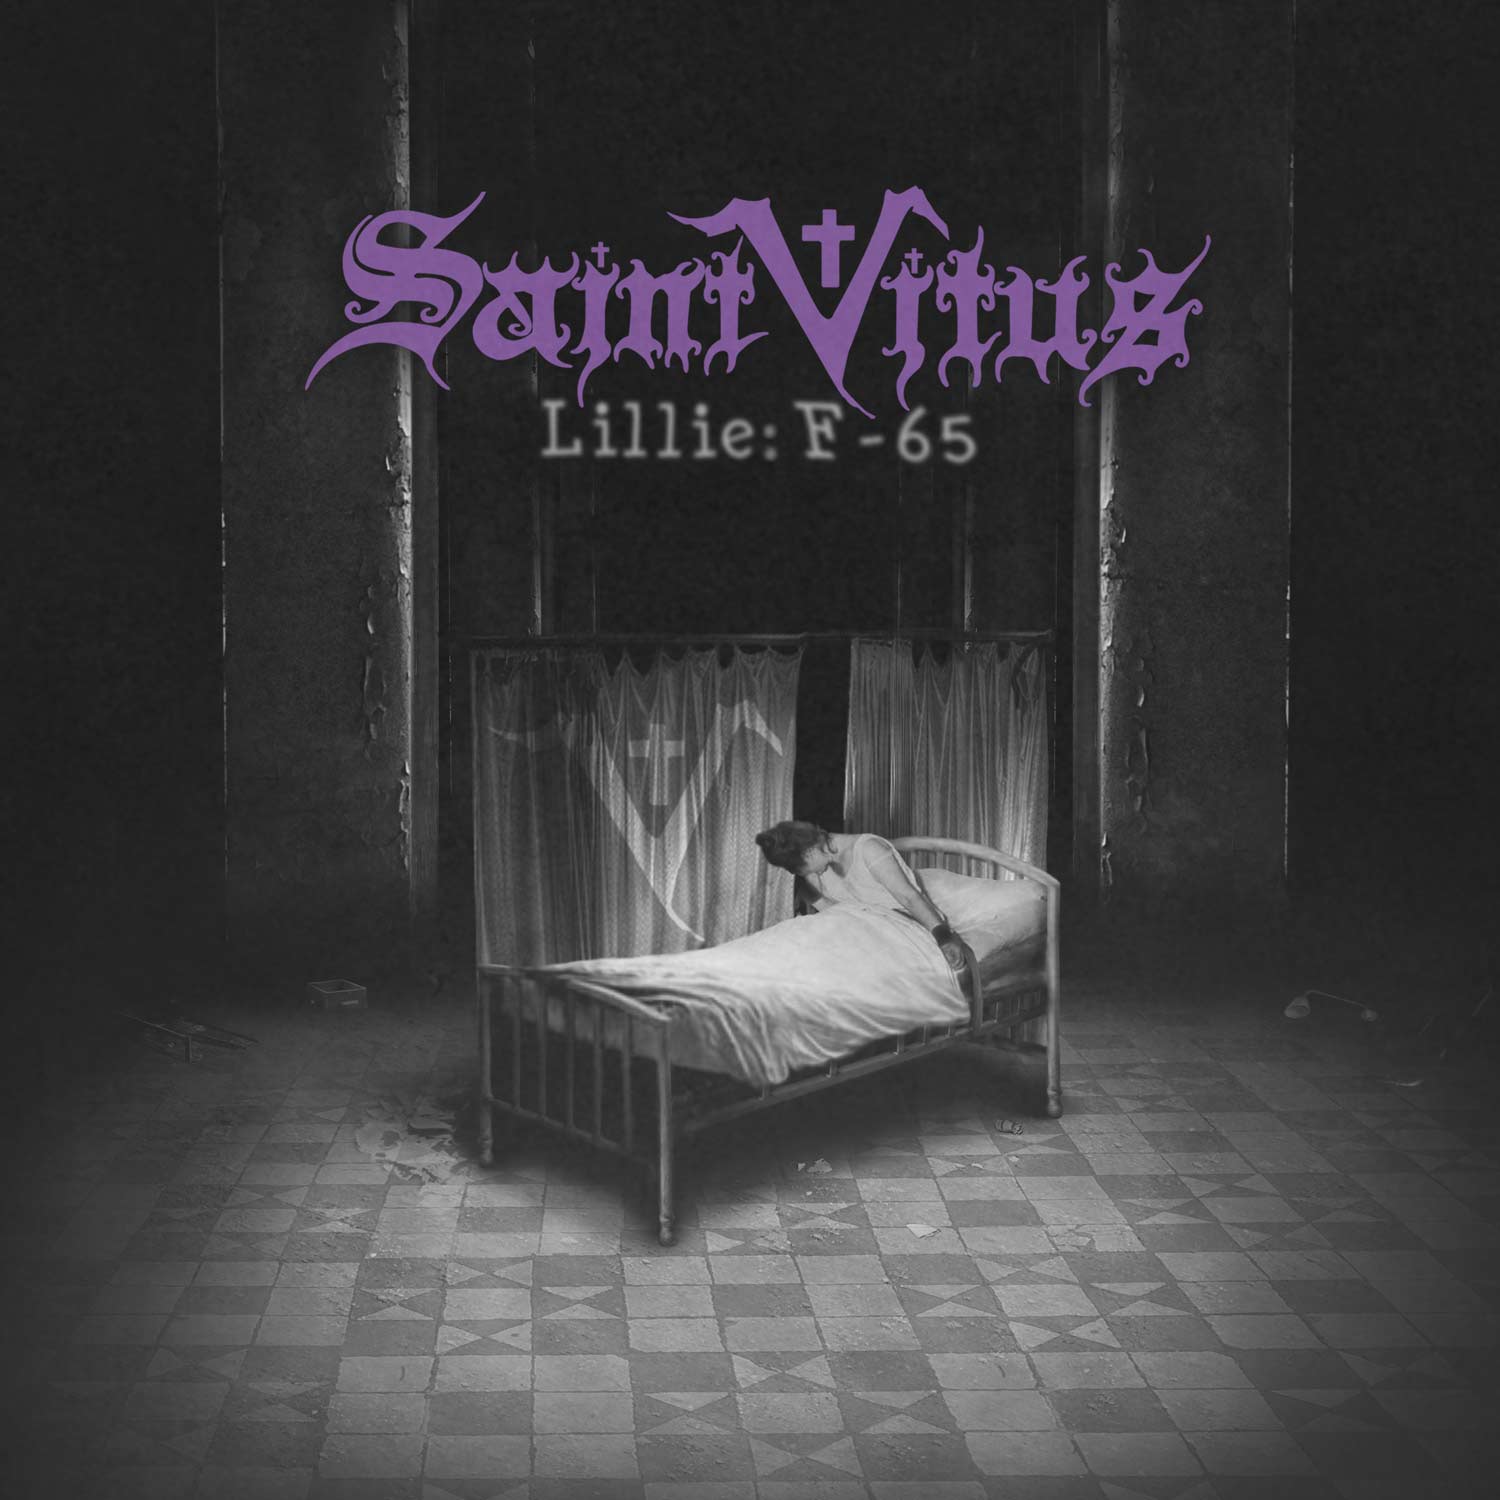 News Added Feb 03, 2012 "Lillie: F-65" is the comeback album of the doom metal band Saint Vitus. It comes after their last 1995 album "Die Healing". Tracklist: 1 Suffer Undead (0:59) 2 Lillie: F-65 (5:16) 3 Cannibal Halloween (12:20) 4 Clash Titan Heavy Metal (8:07) 5 Predator 3x (4:00) 6 Evil Knife (3:12) 7 […]